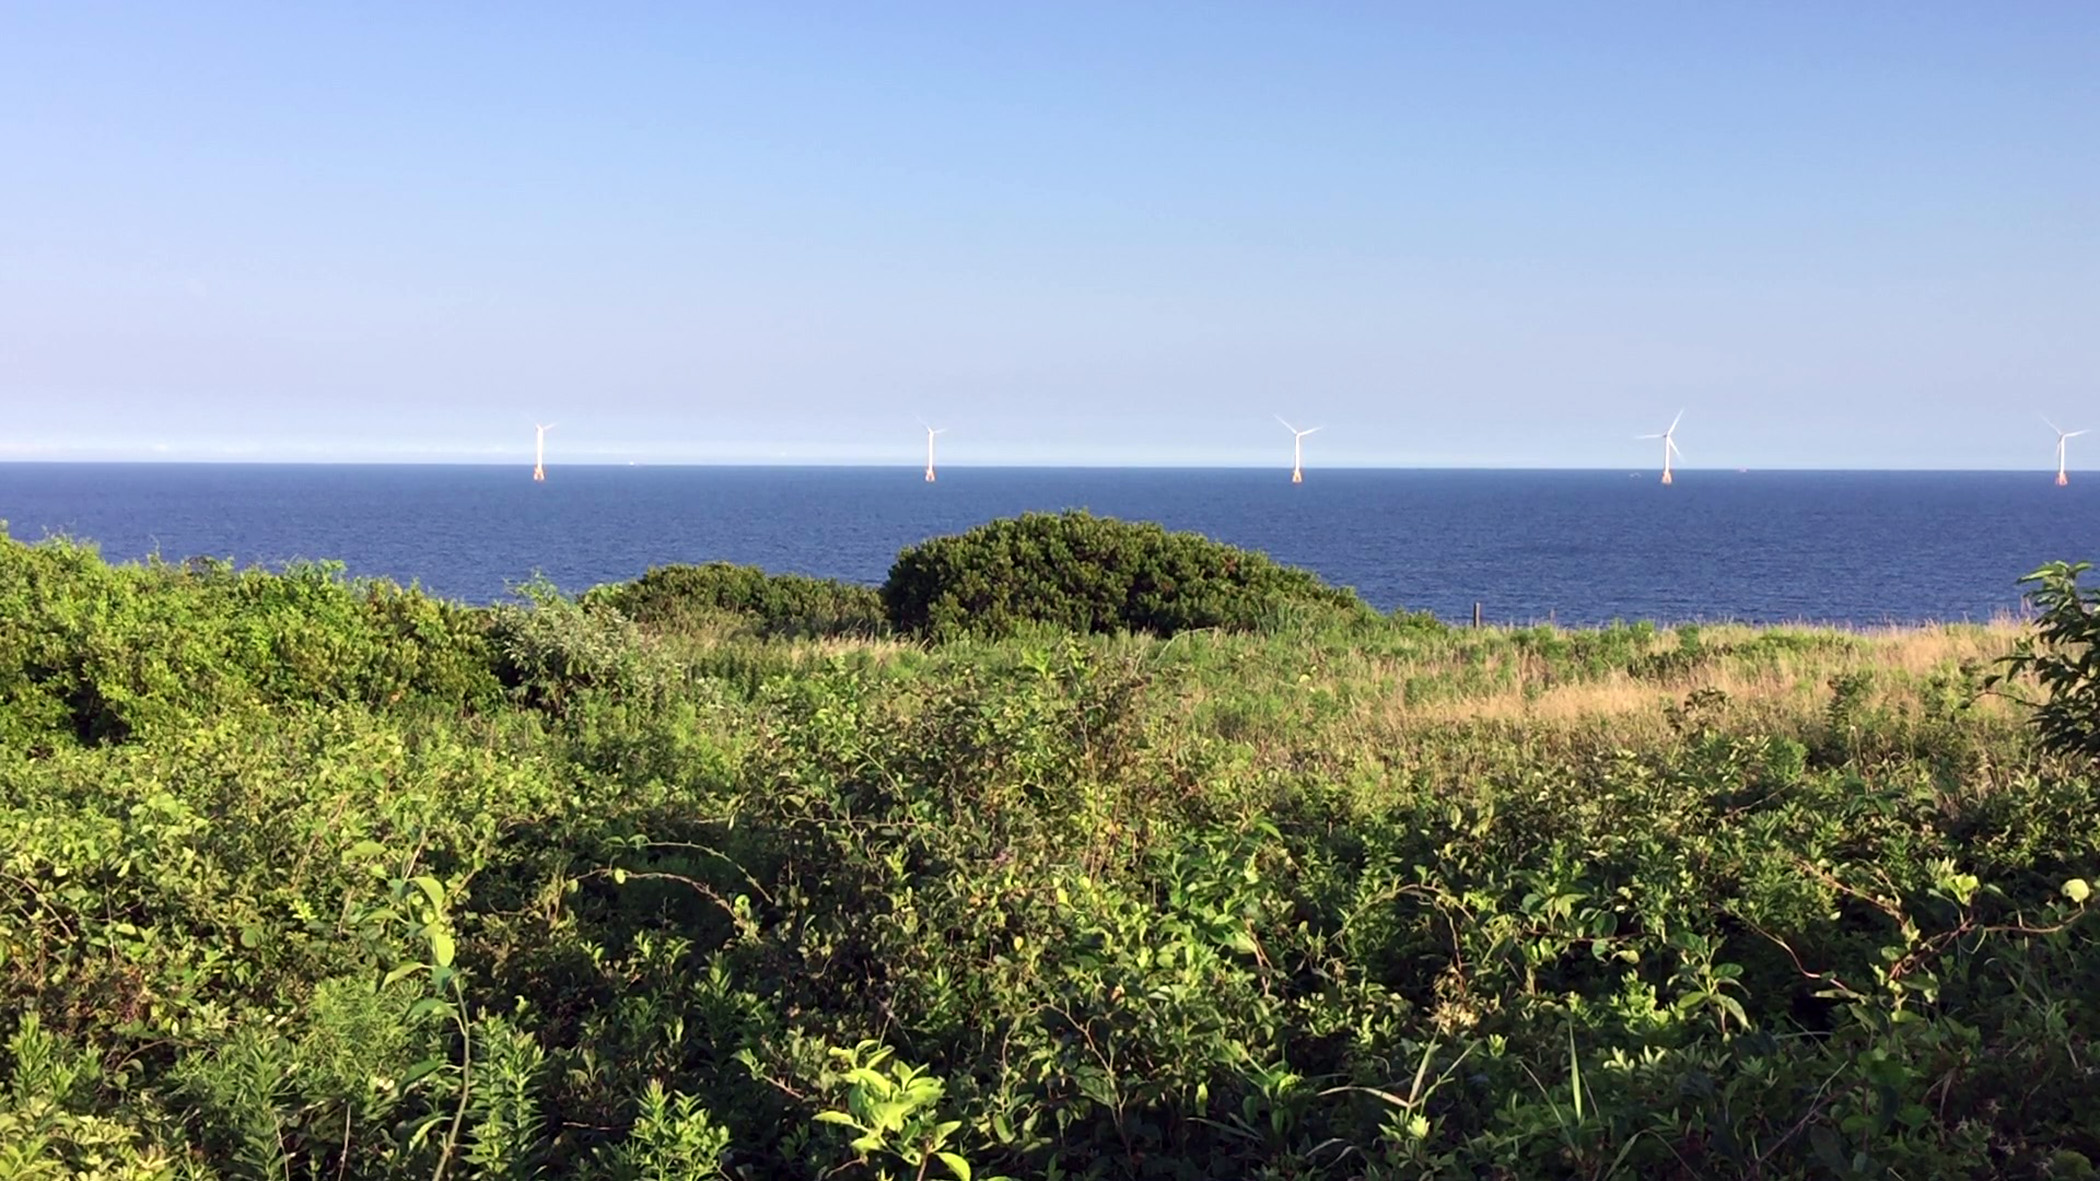 Wind turbines off the coast of Block Island, RI